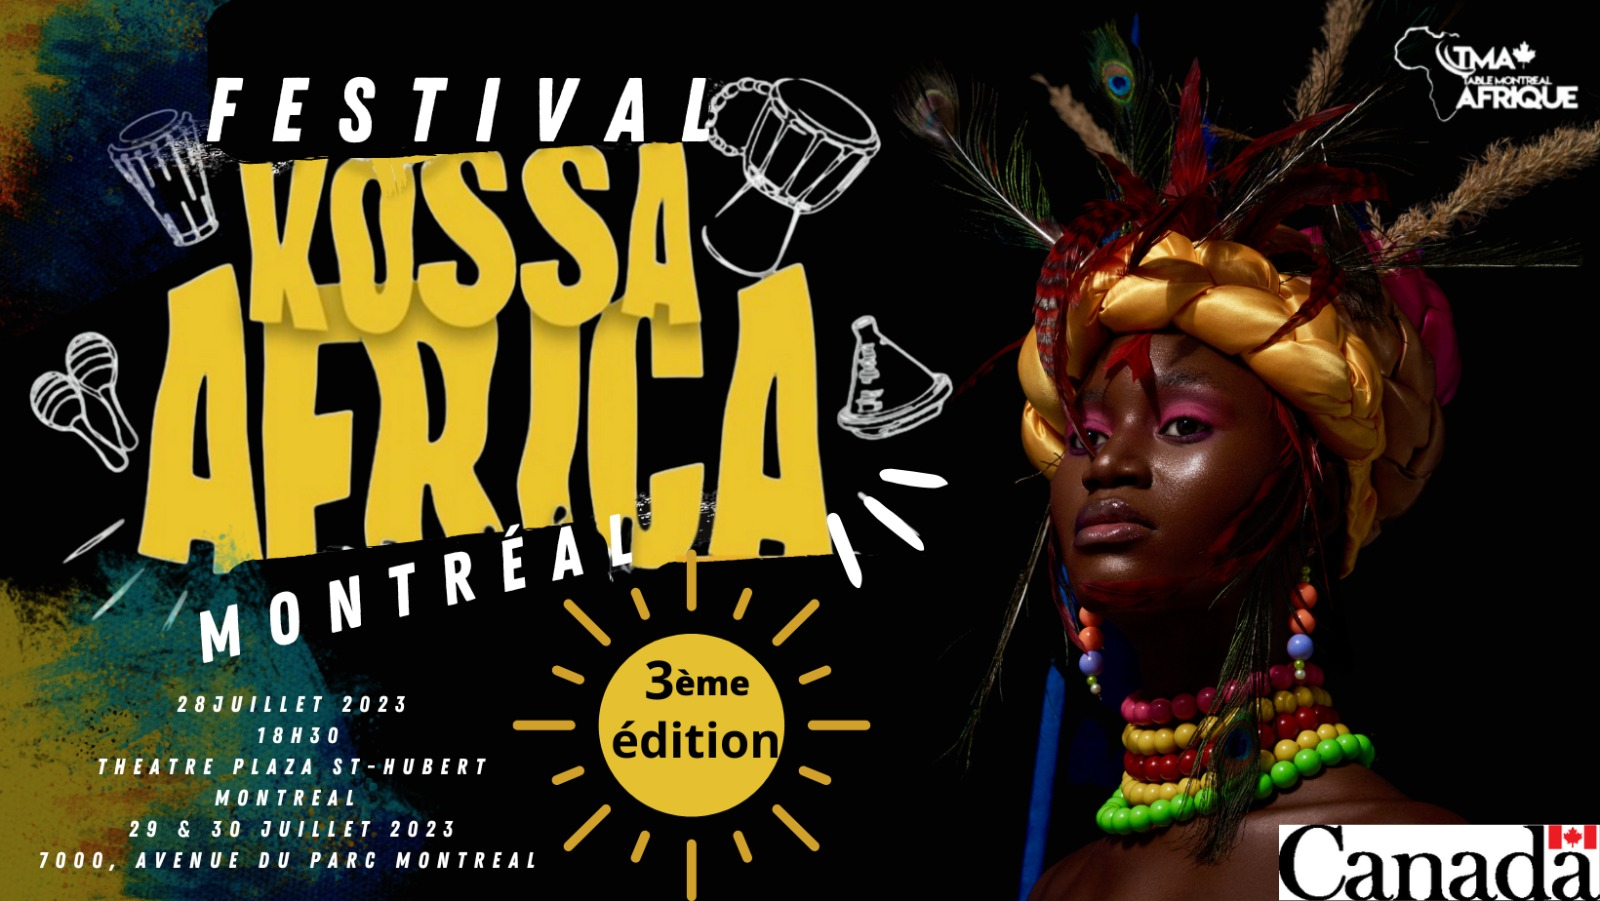 Festival Kossa Africa Mtl